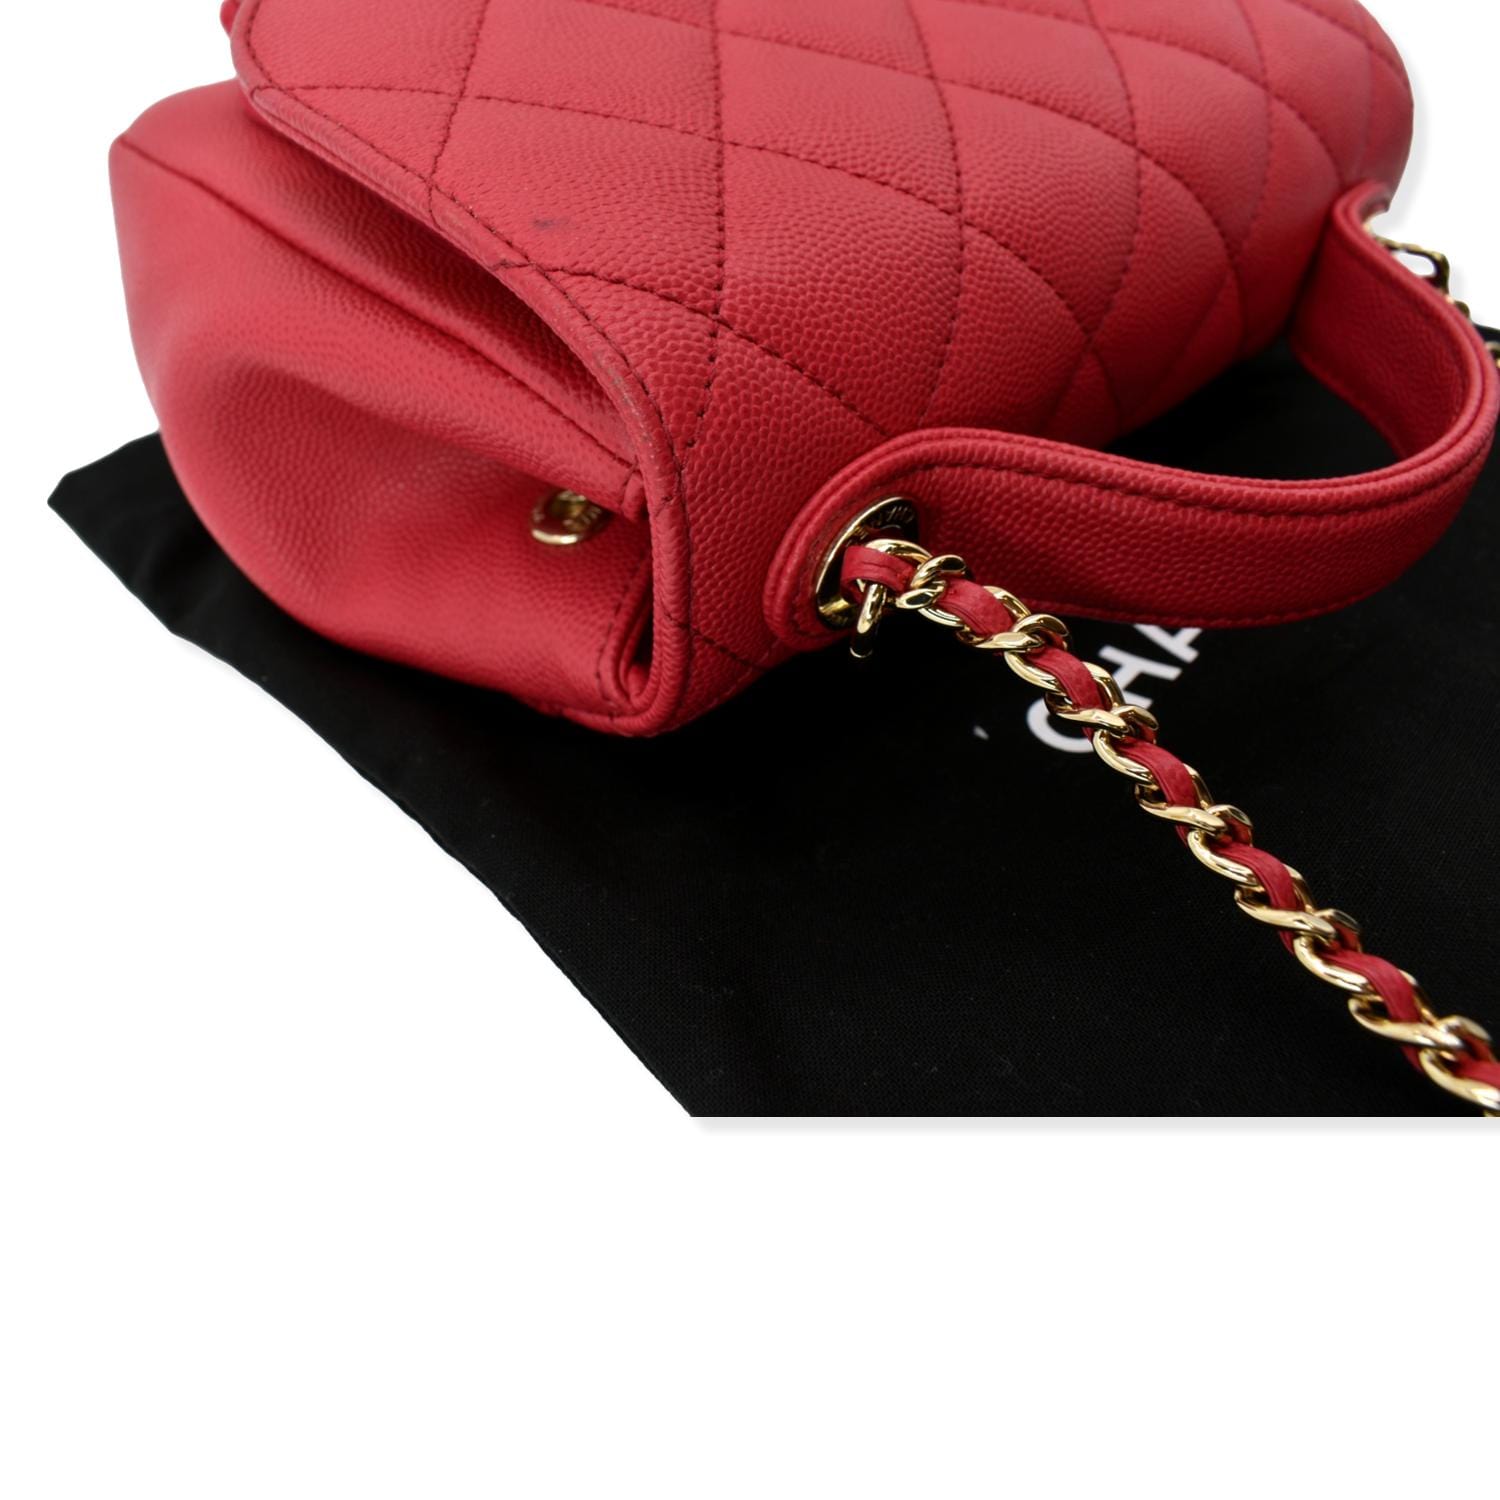 Chanel Business Affinity Bag Size Comparison Mini VS Small